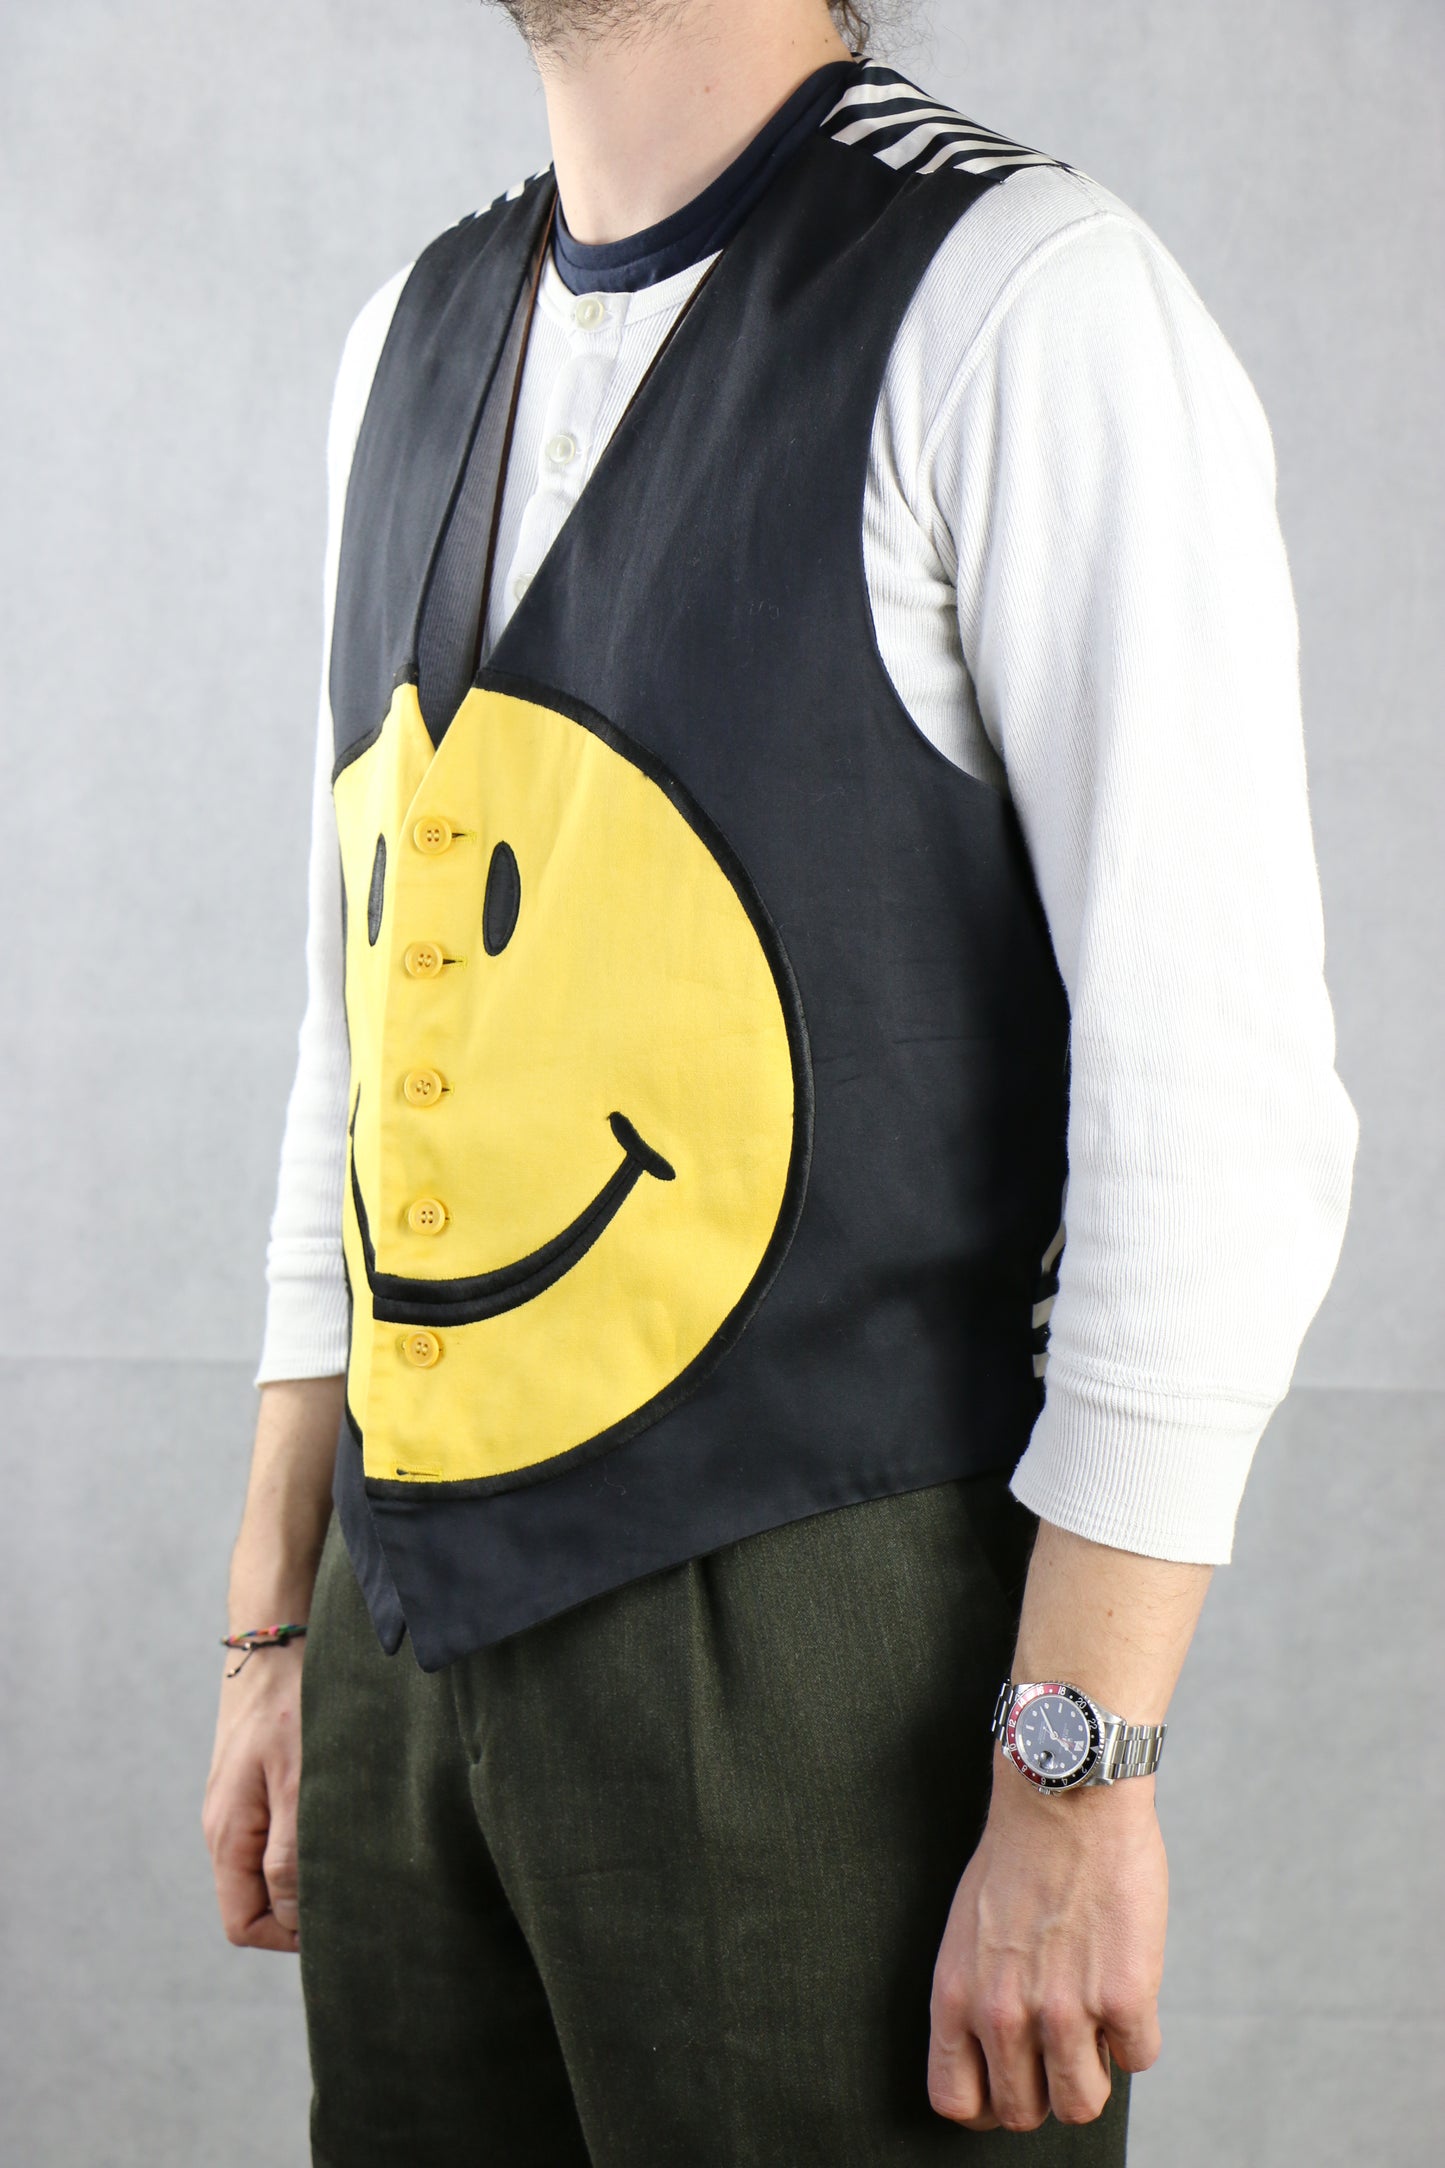 Moschino 'Smiley' Vest - vintage clothing clochard92.com